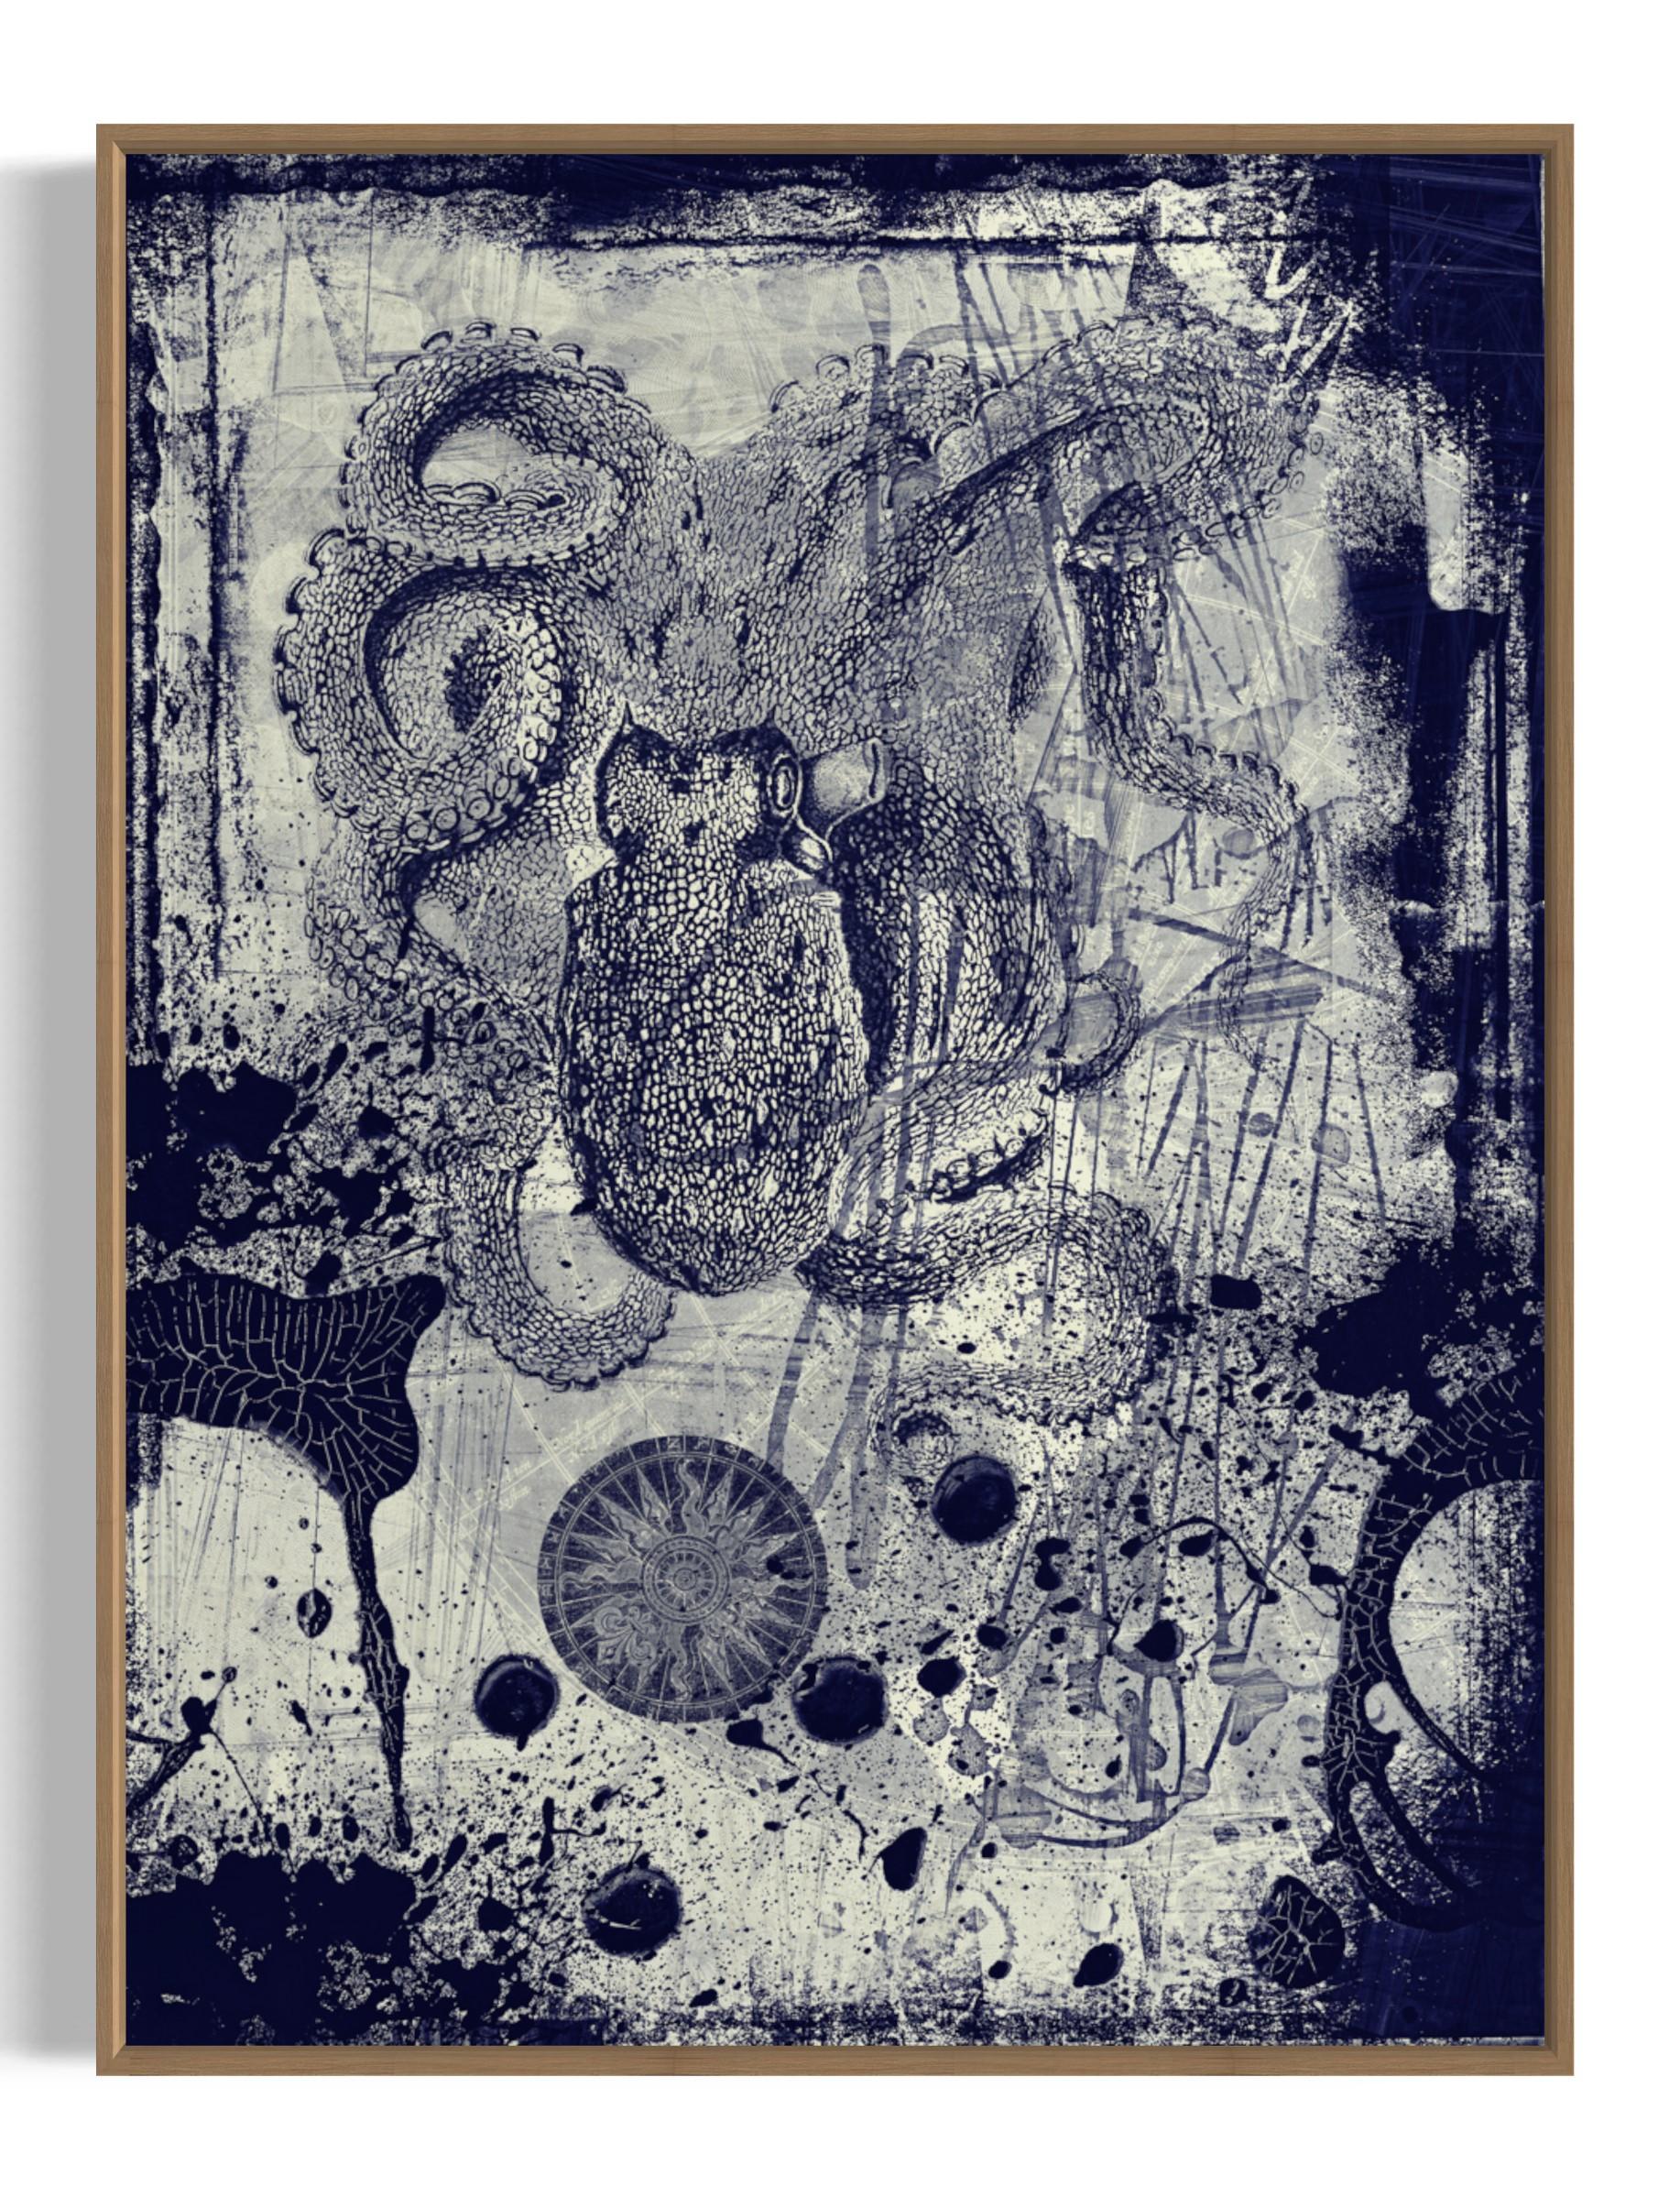 Octopus dans sa propre encre - Mixed Media Art de Thomas Bollinger